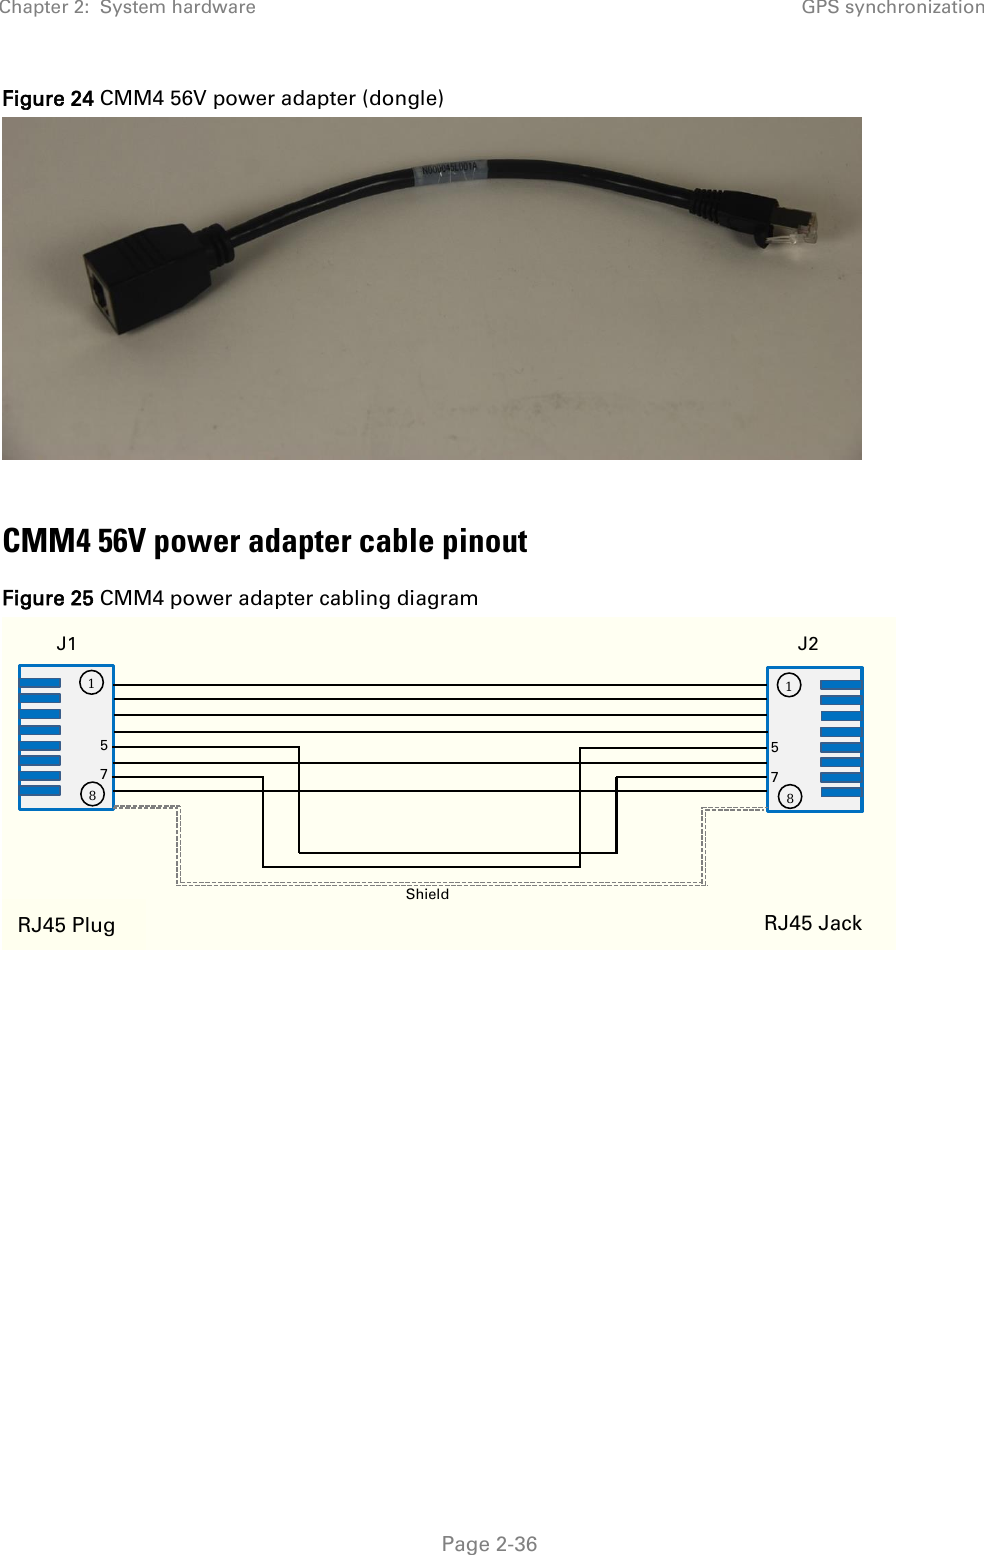 Chapter 2:  System hardware GPS synchronization   Page 2-36 Figure 24 CMM4 56V power adapter (dongle)   CMM4 56V power adapter cable pinout Figure 25 CMM4 power adapter cabling diagram   1 8 1 8 J1 J2 RJ45 Plug RJ45 Jack 5 7 5 7 Shield 